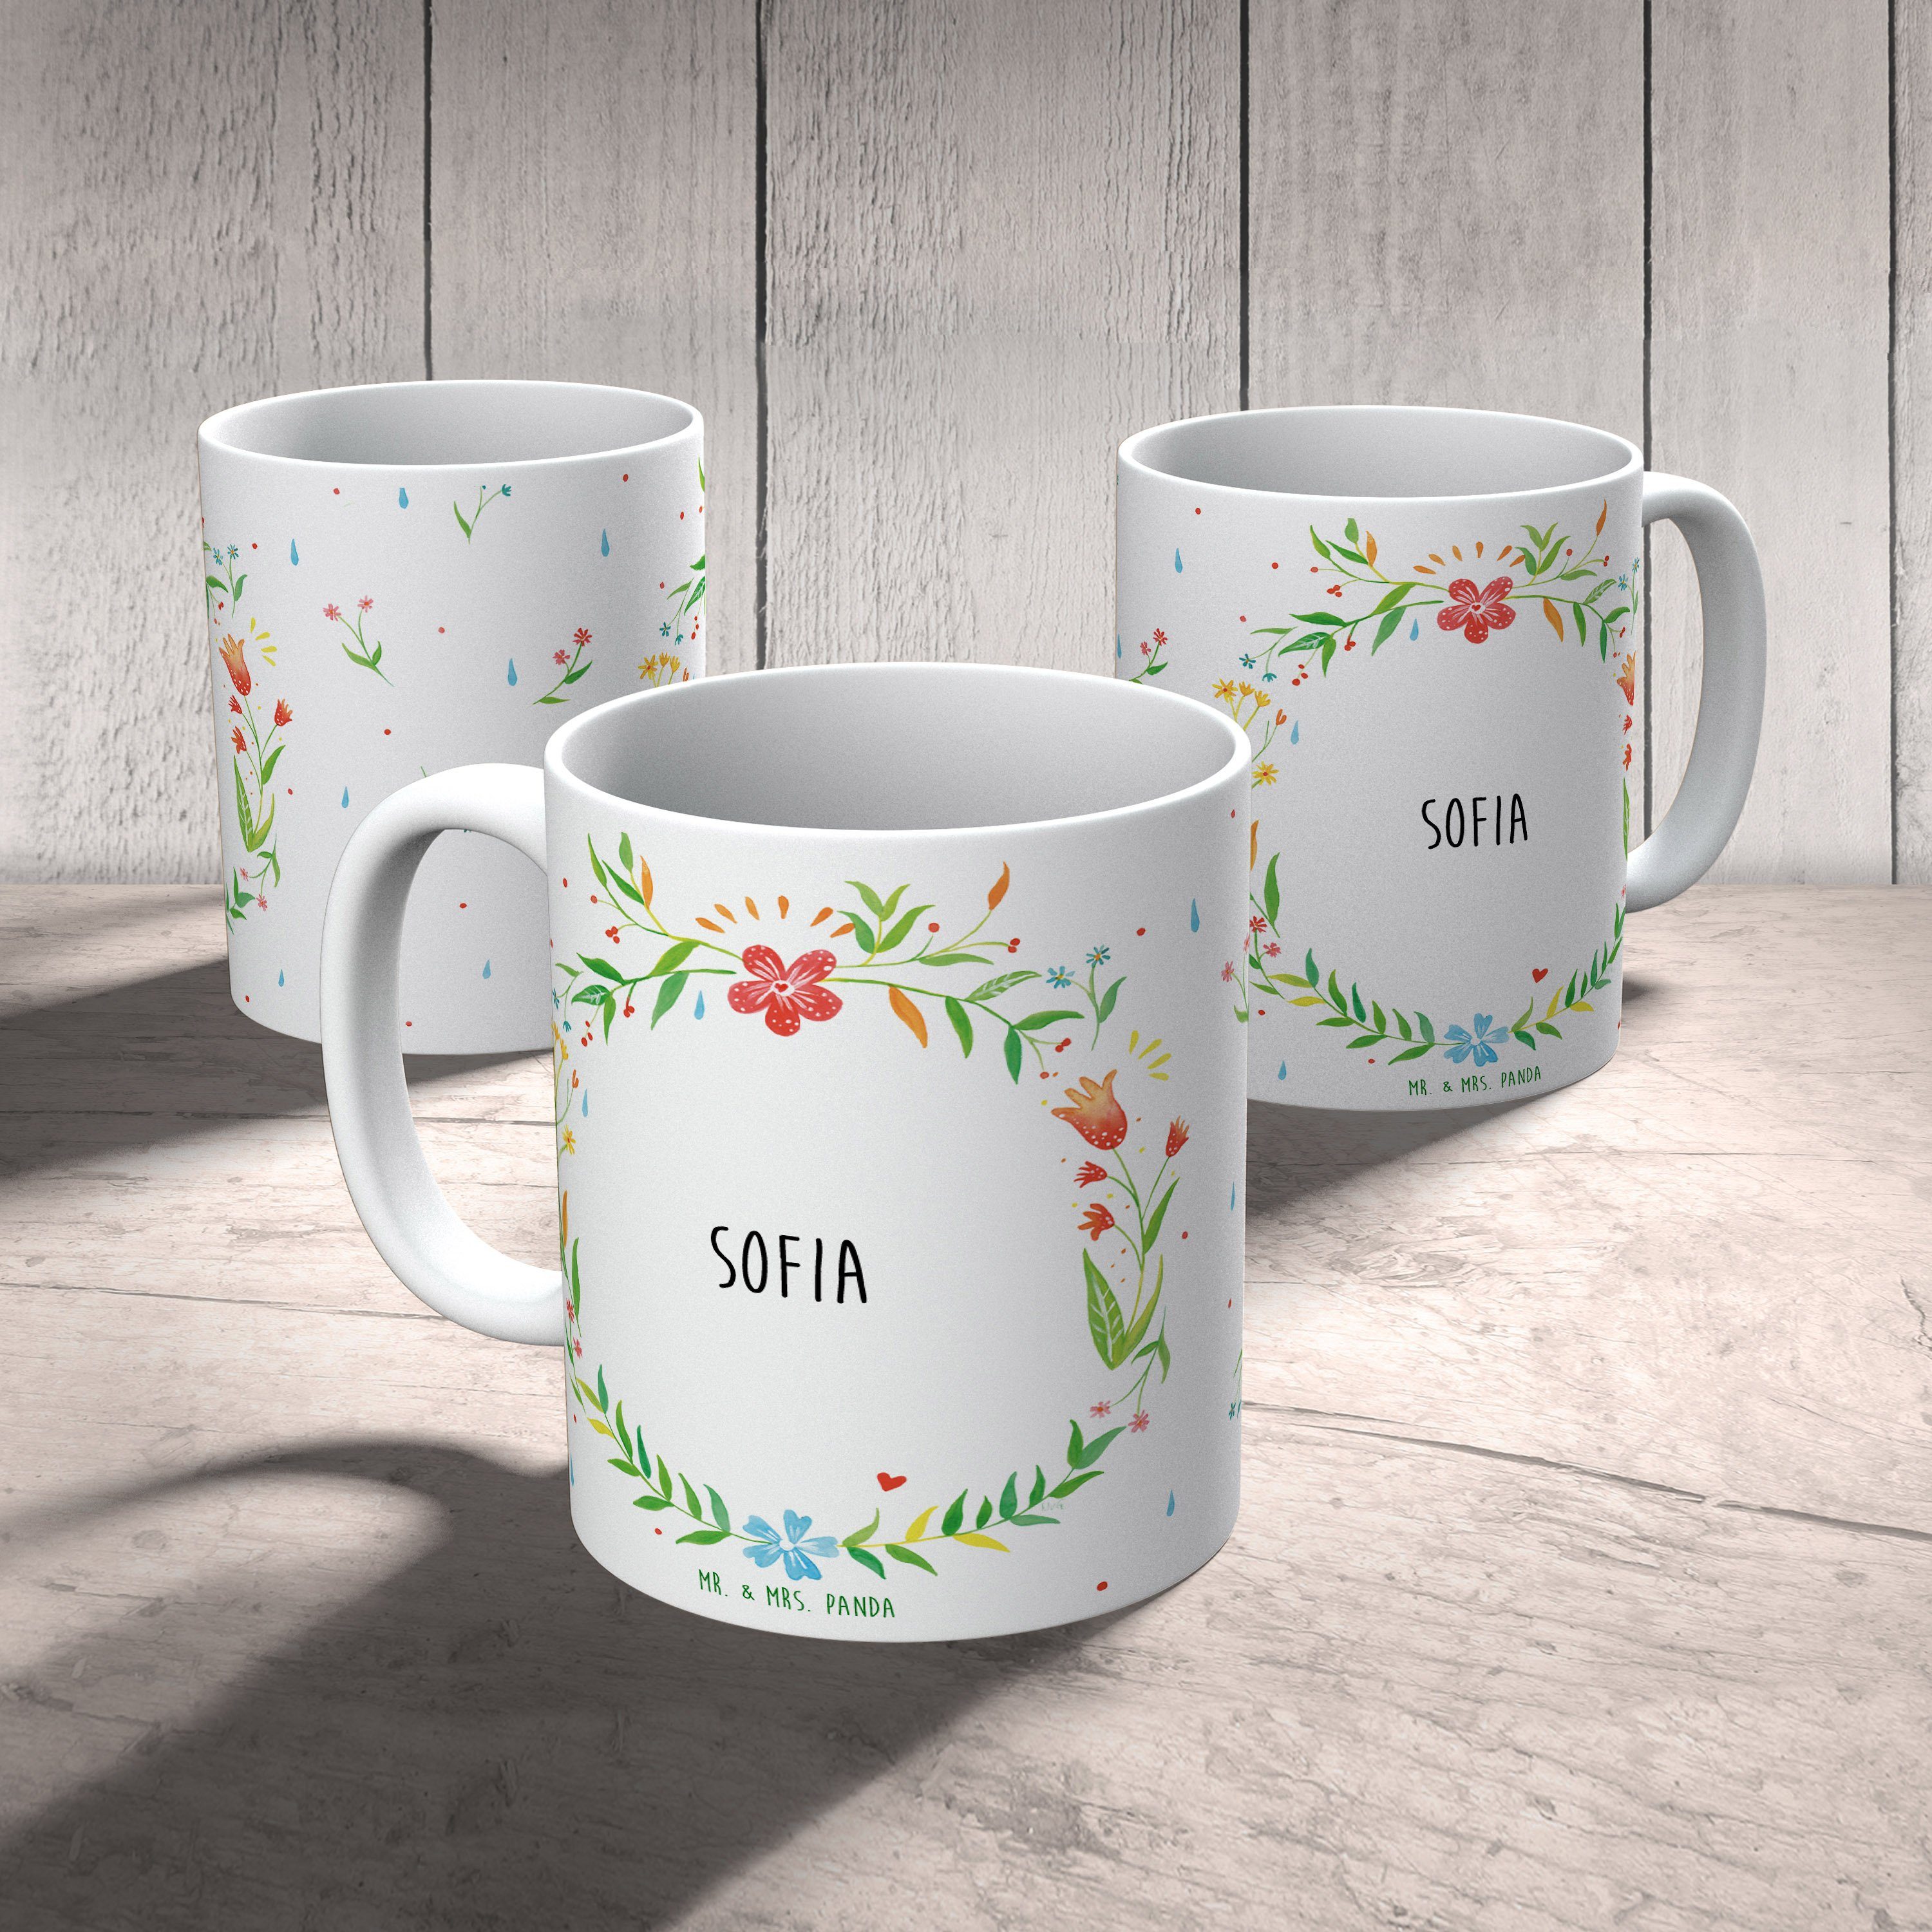 Tasse, Kaffeetasse, - Geschenk, & Sofia Mr. Tasse Mrs. Büro Tasse Panda Sprü, Keramik Porzellantasse,